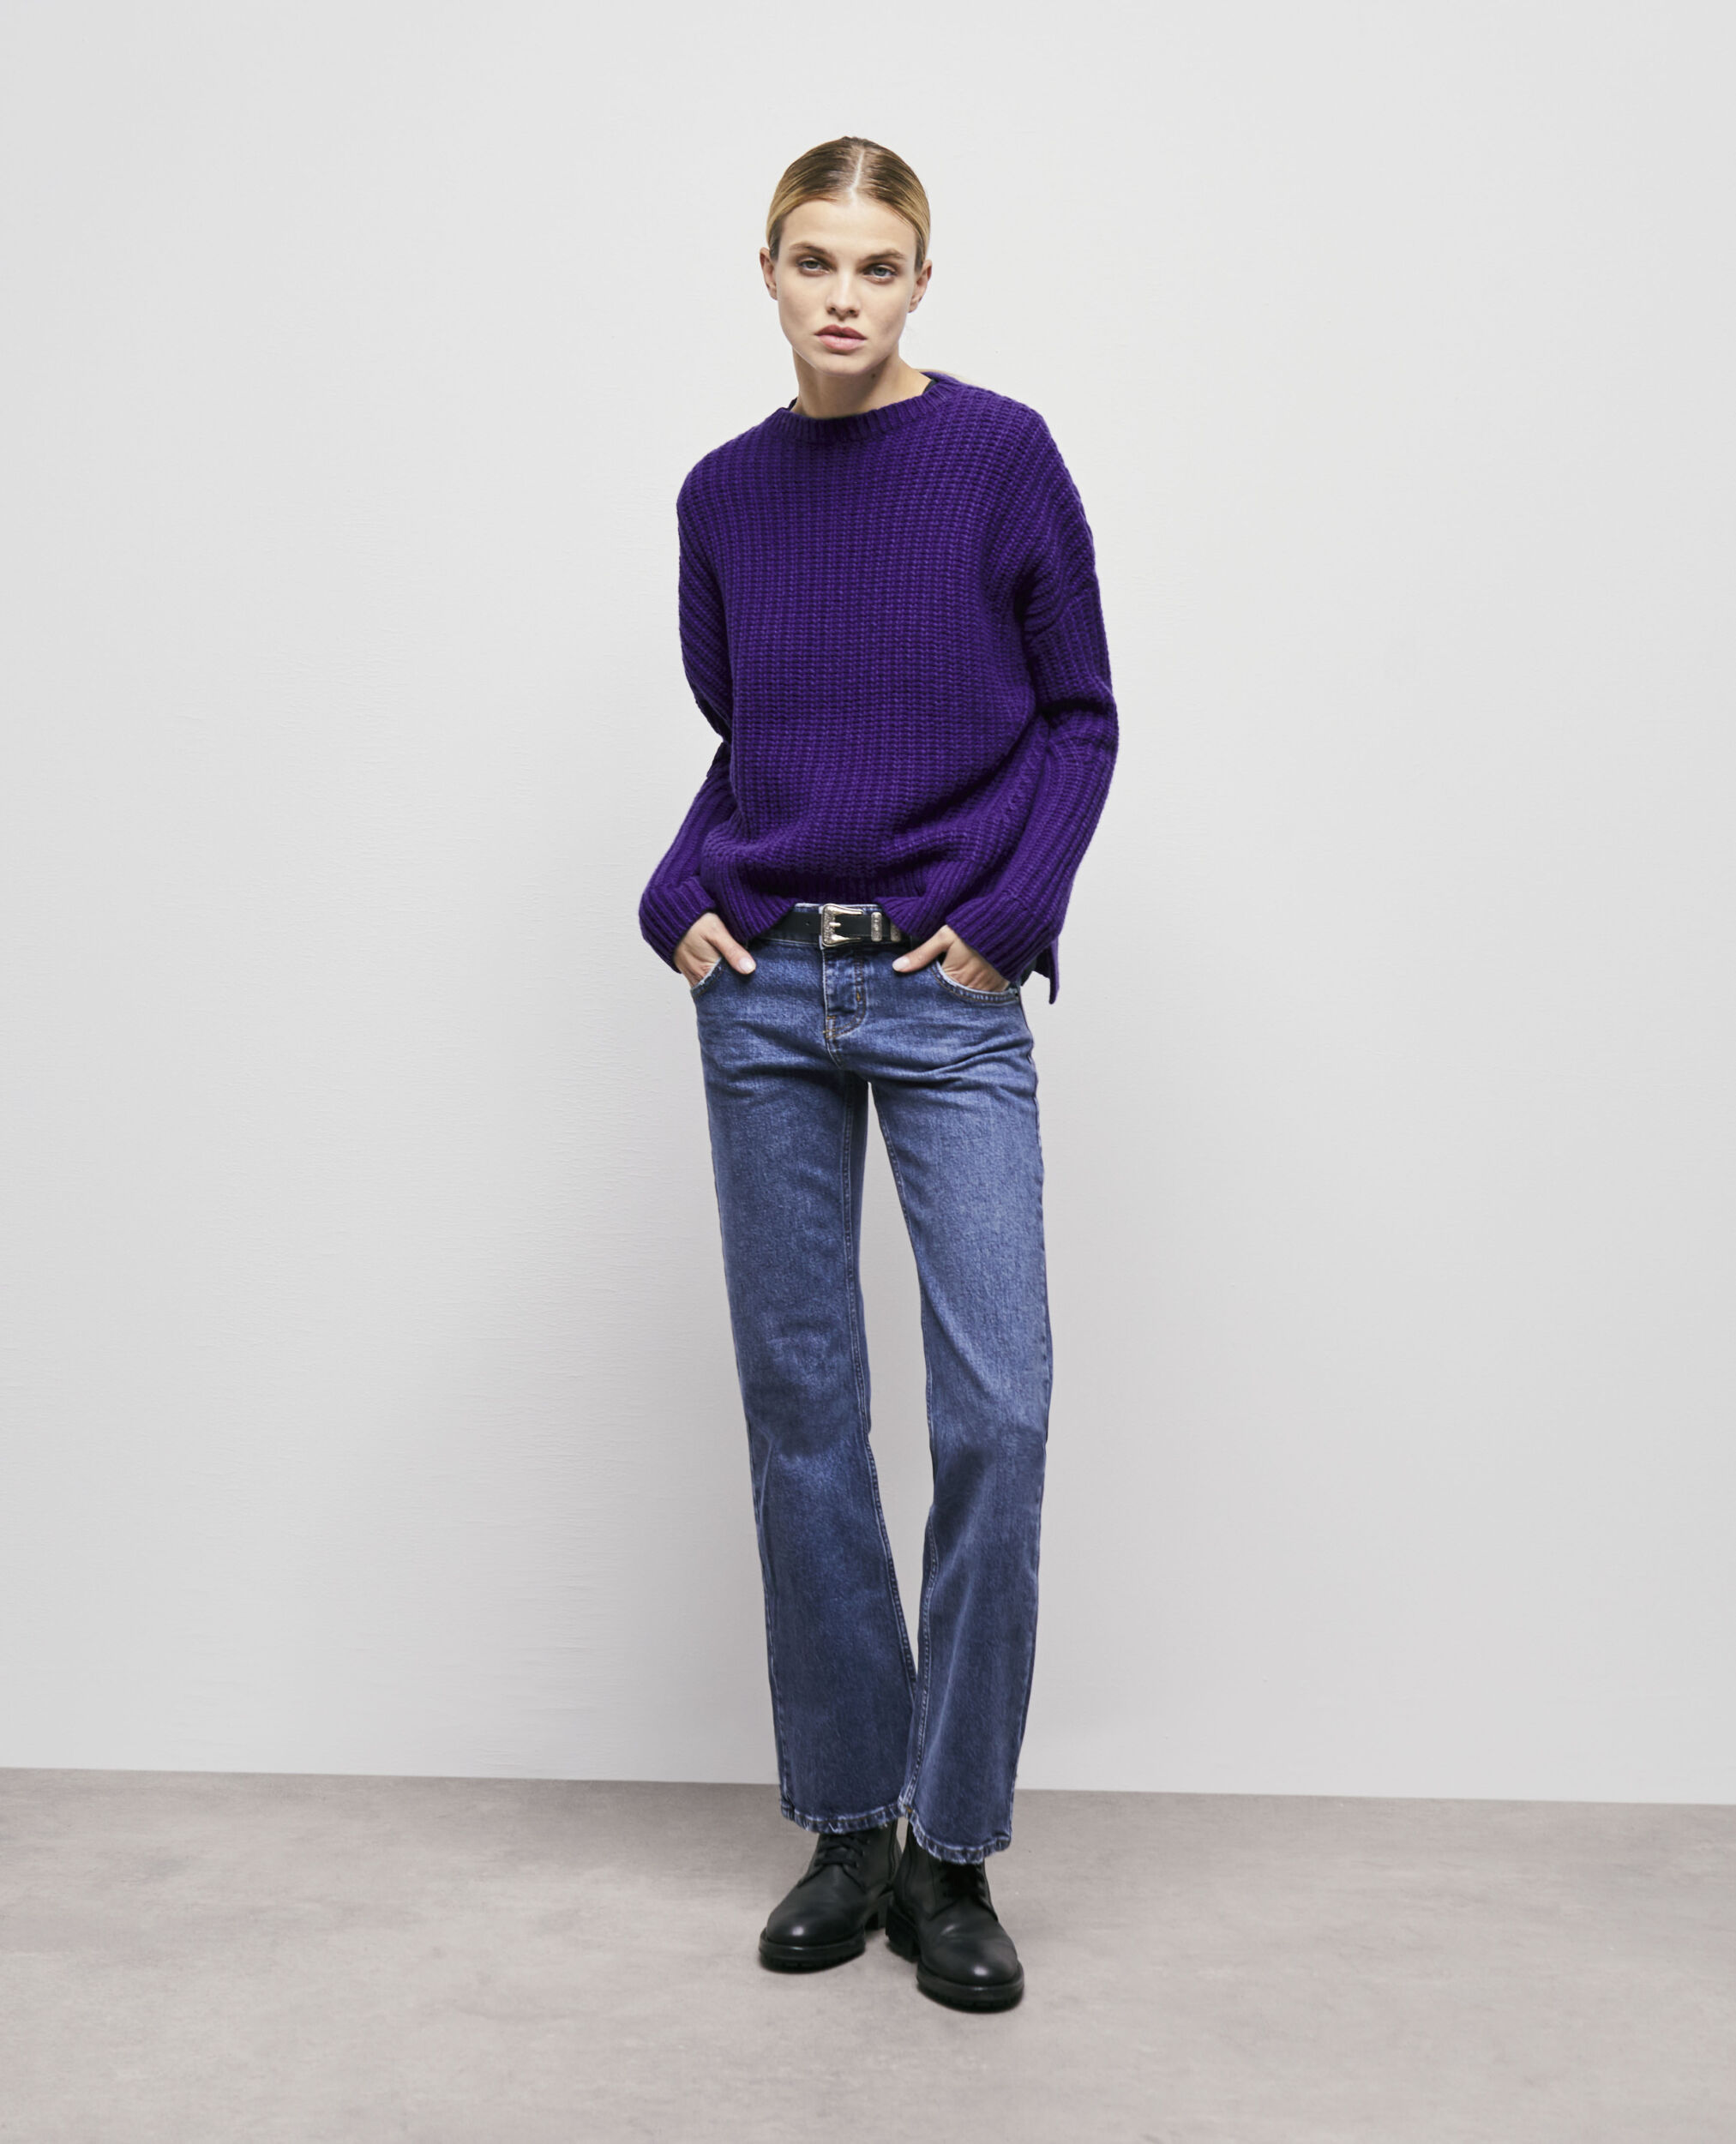 Jersey lana violeta, PURPLE, hi-res image number null